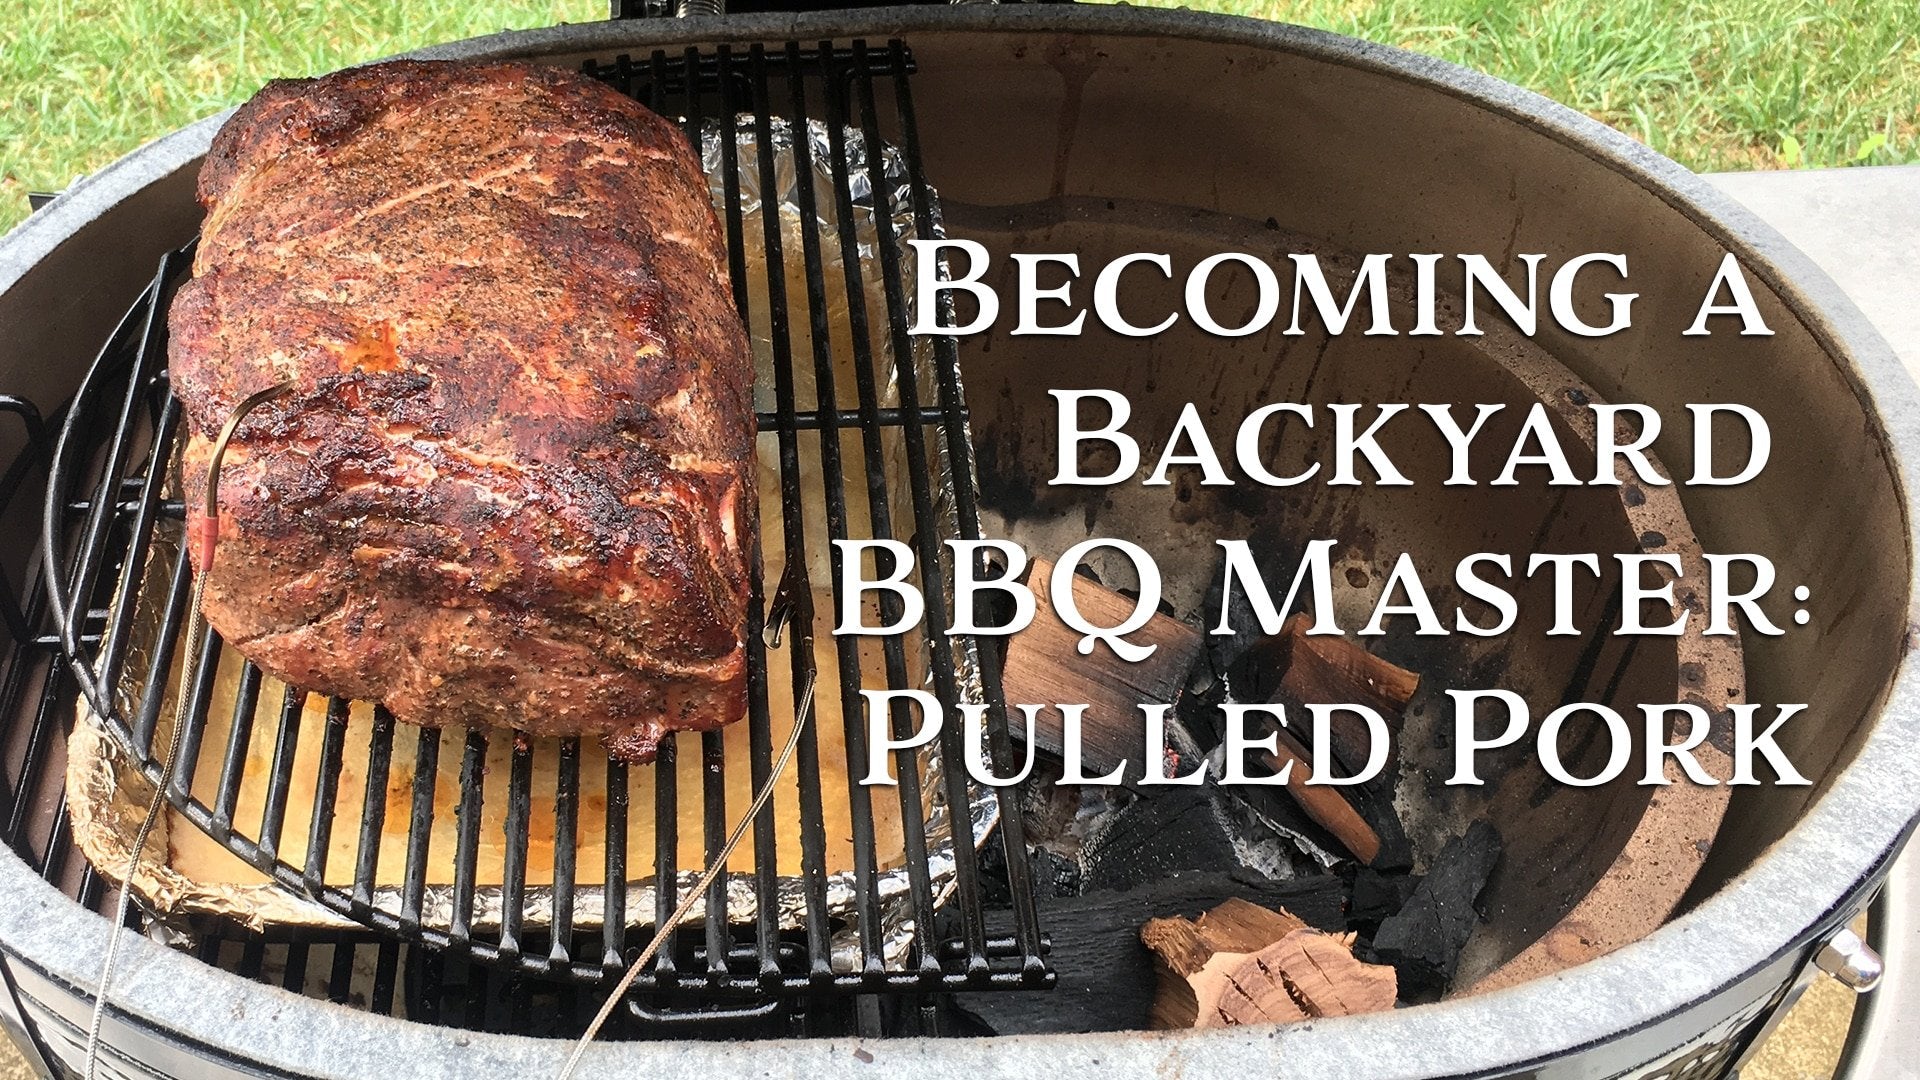 Becoming a Backyard BBQ Master: Pulled Pork